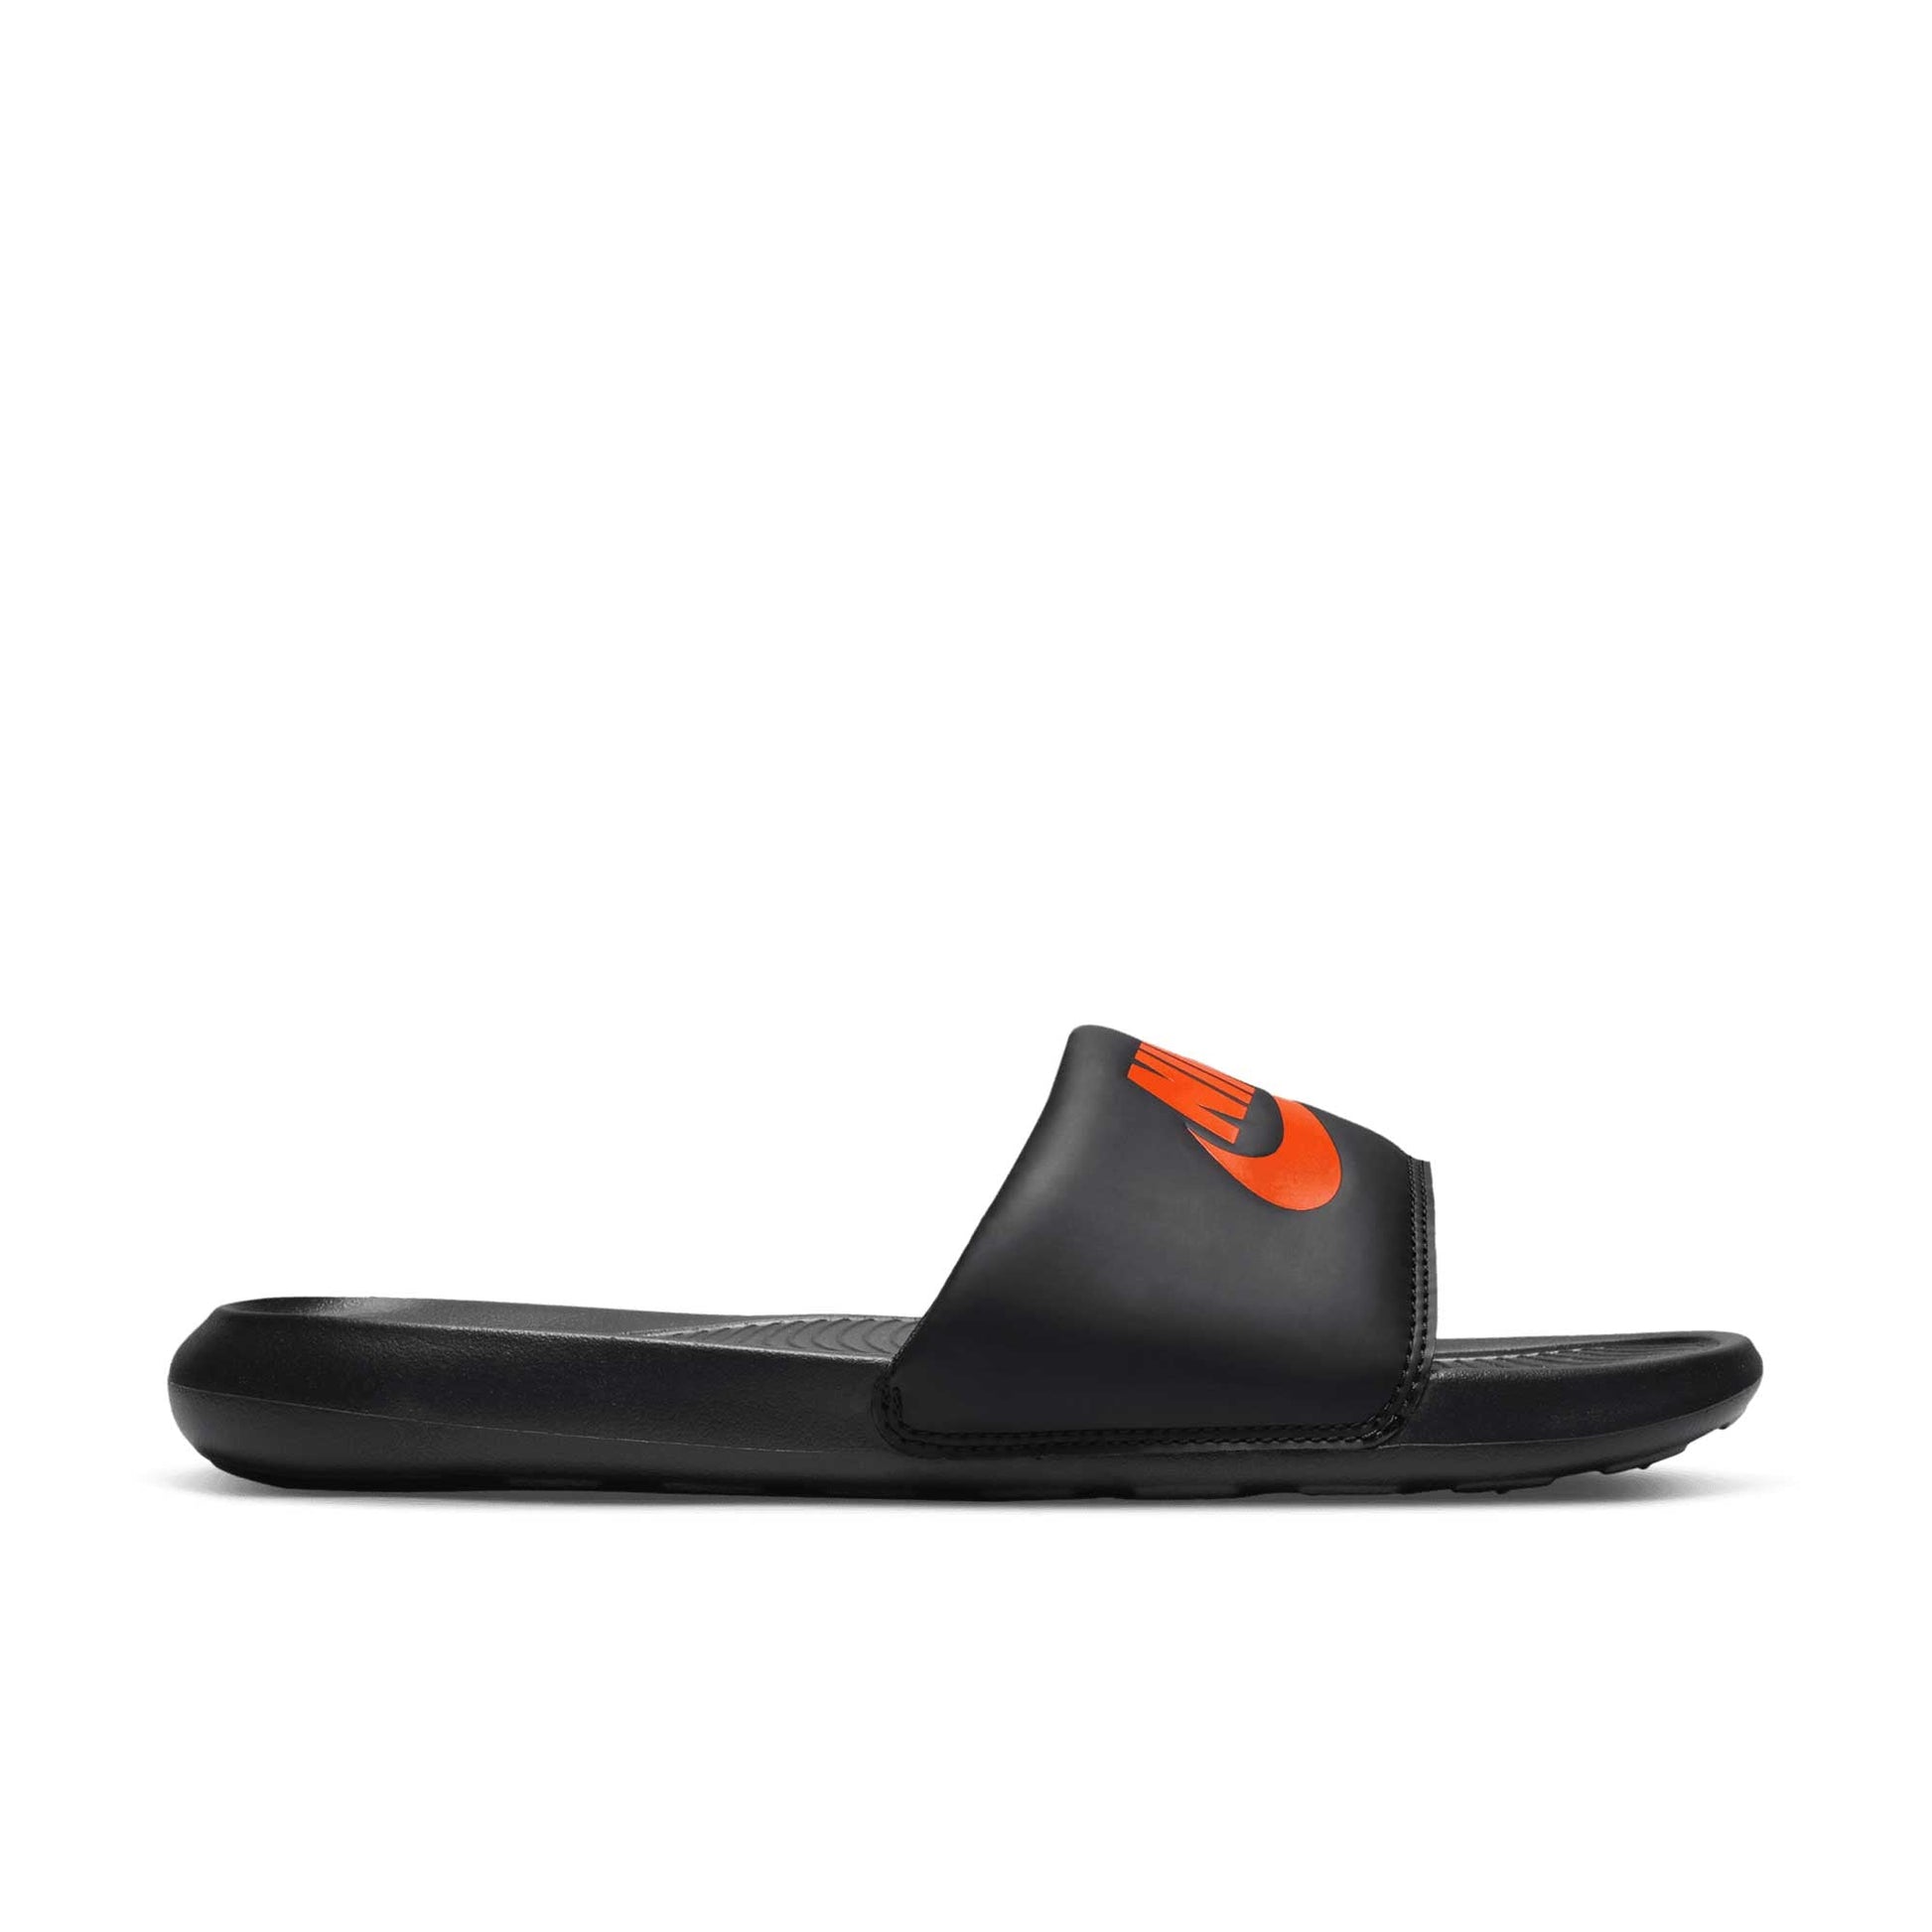 Nike SB Victori One, black/team orange-black - Tiki Room Skateboards - 4